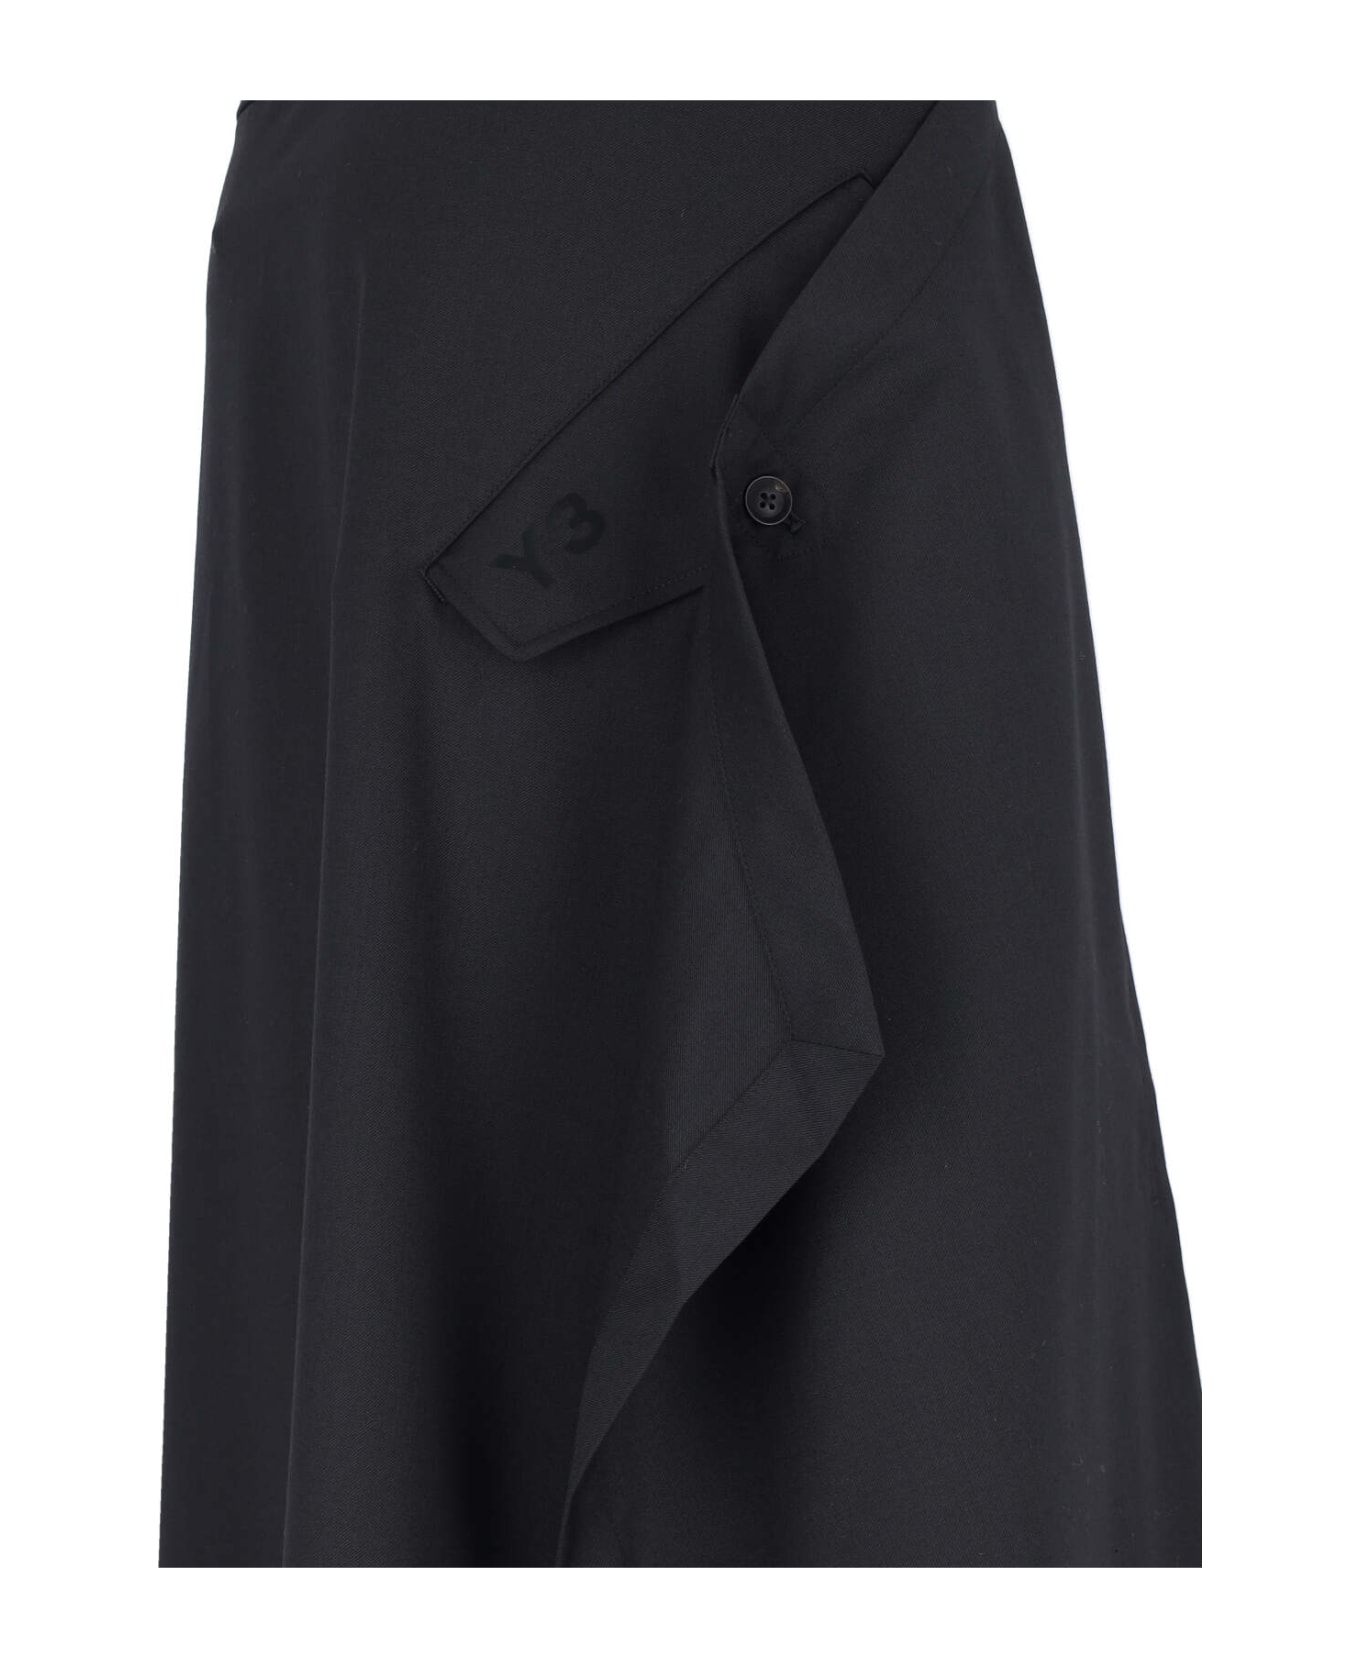 Y-3 Asymmetrical Skirt - Black   スカート